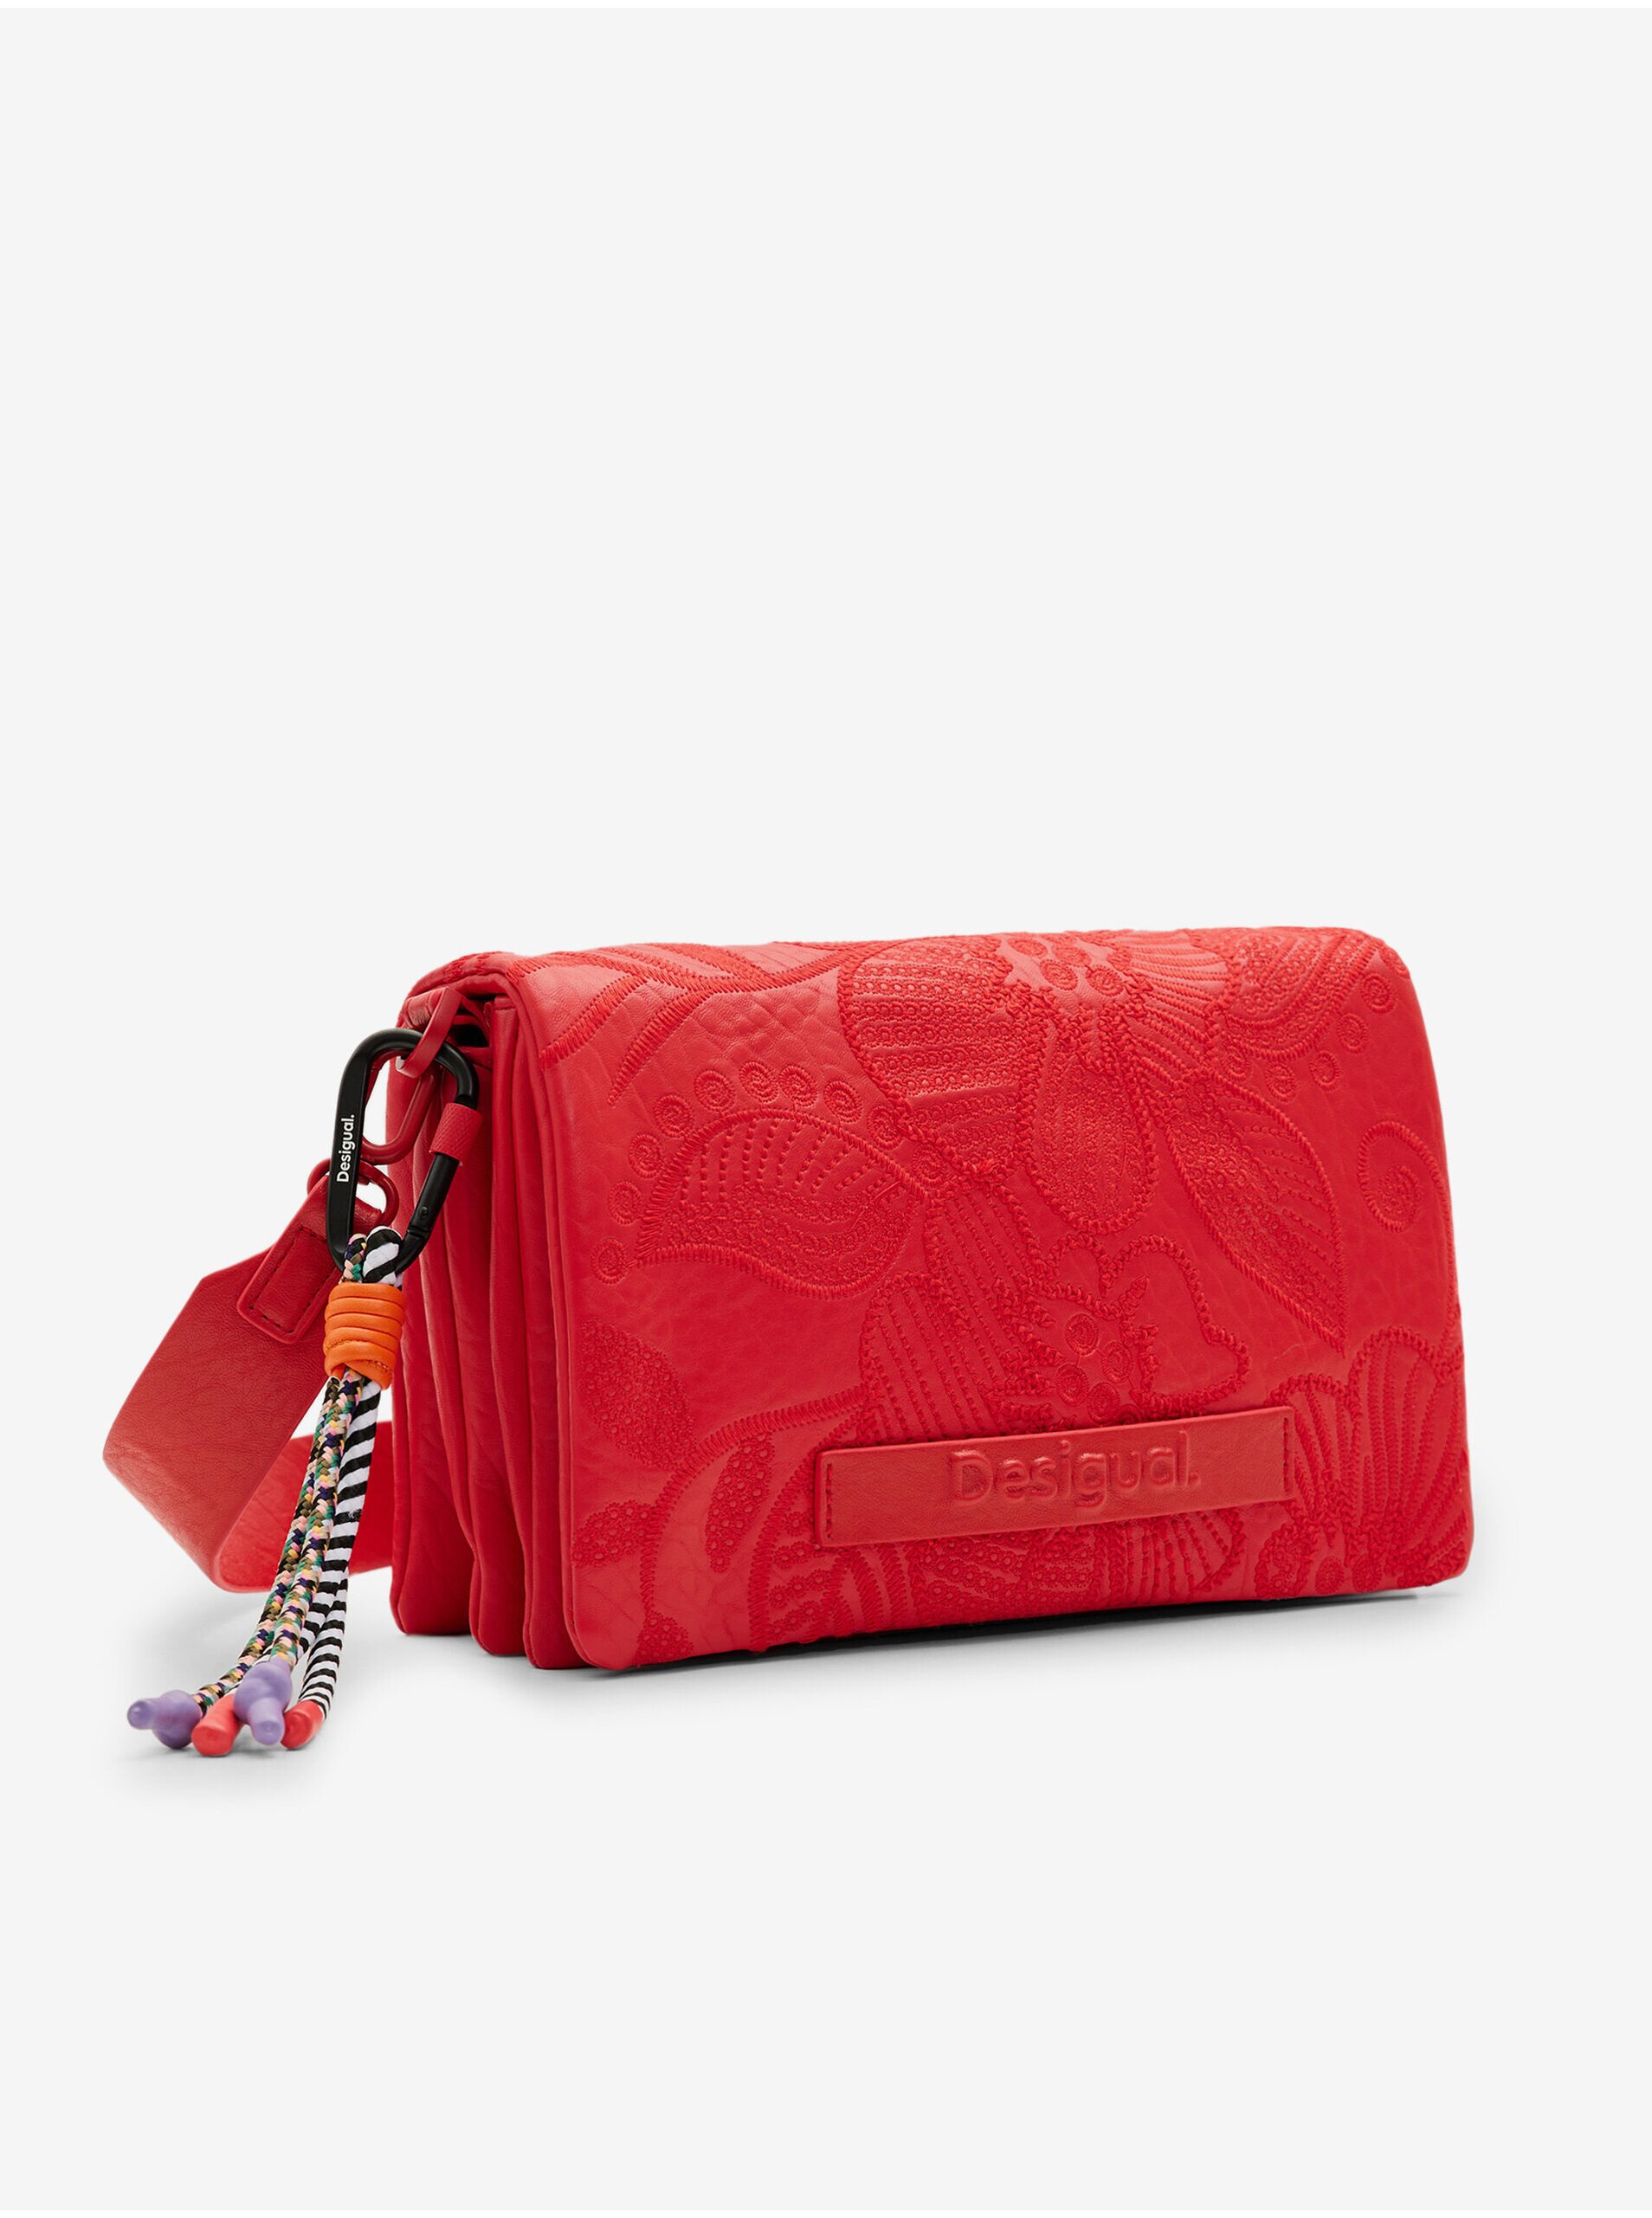 Women's red handbag Desigual Dortmund Flap 2.0 - Ladies